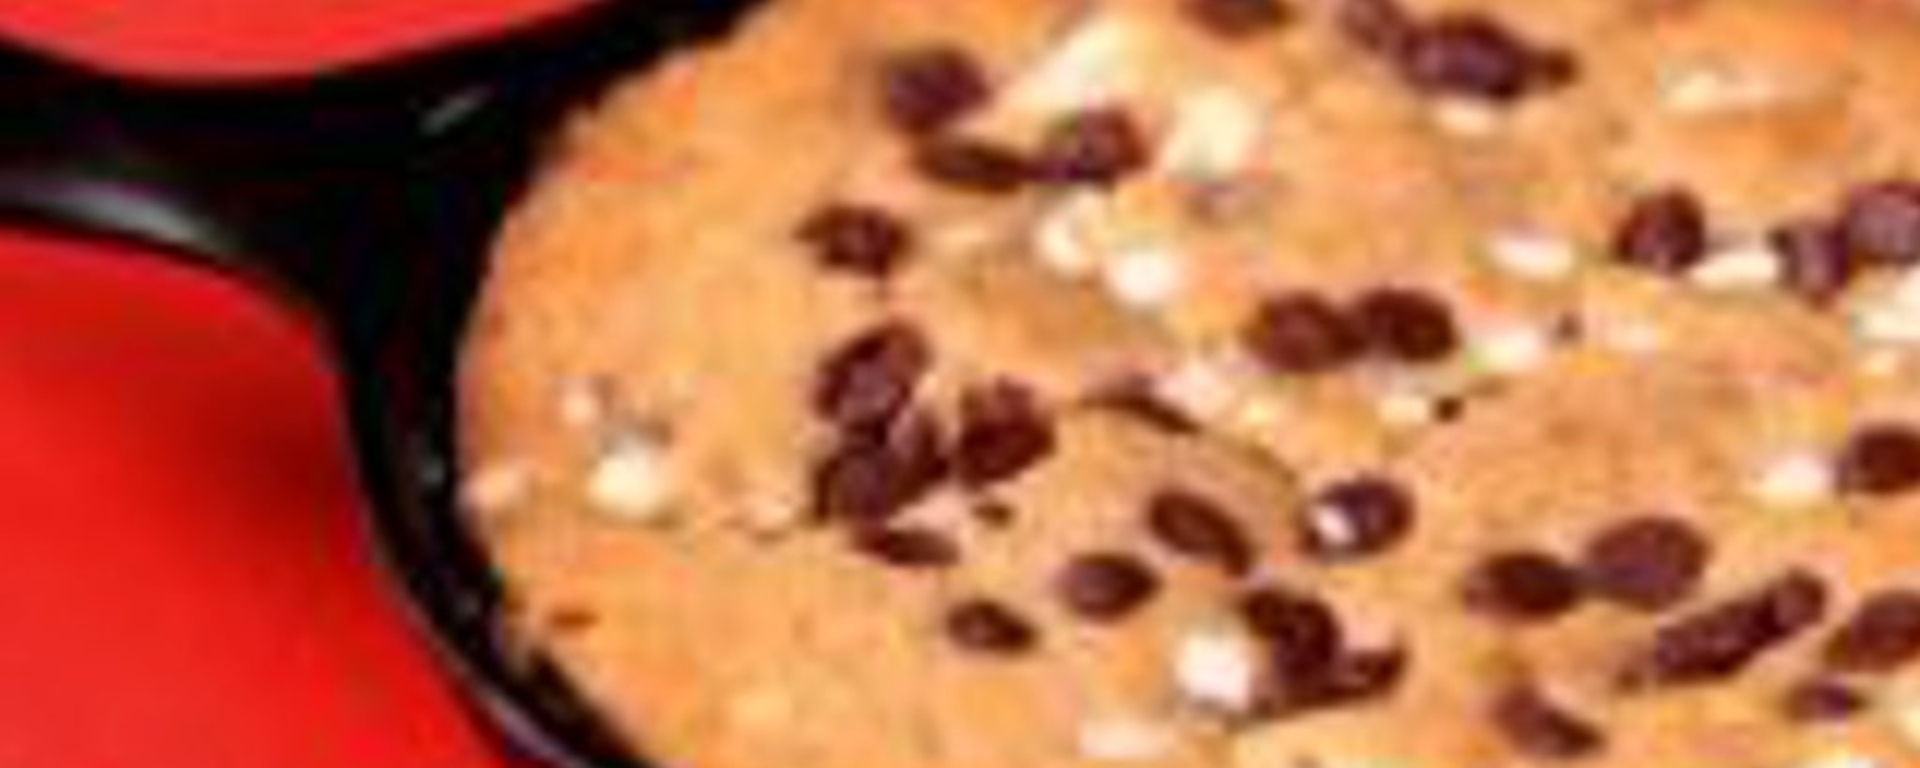 LuvMyRecipe.com - Fudgy Chocolate Chip Skillet Cookie Featured